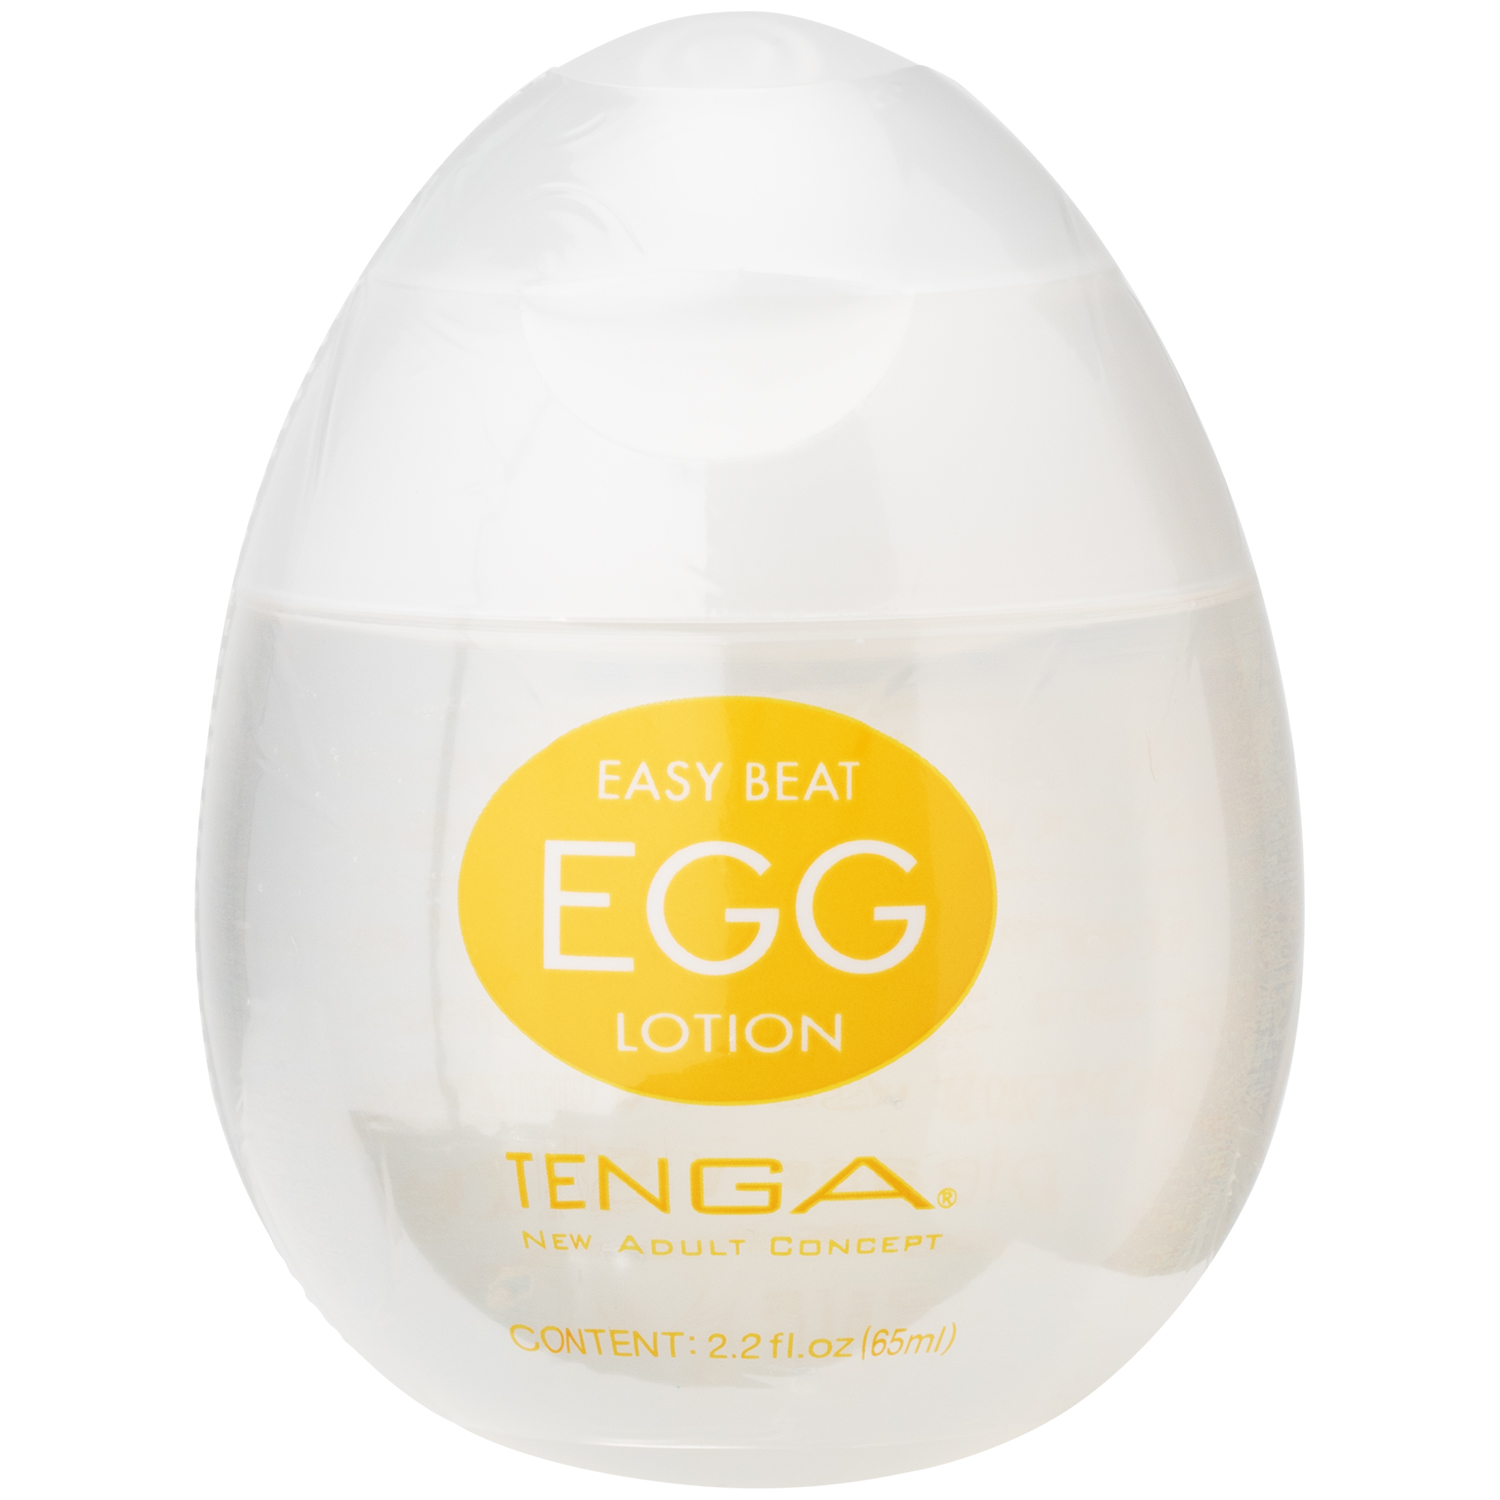 TENGA Egg Lotion Glidmedel 65 ml - Clear